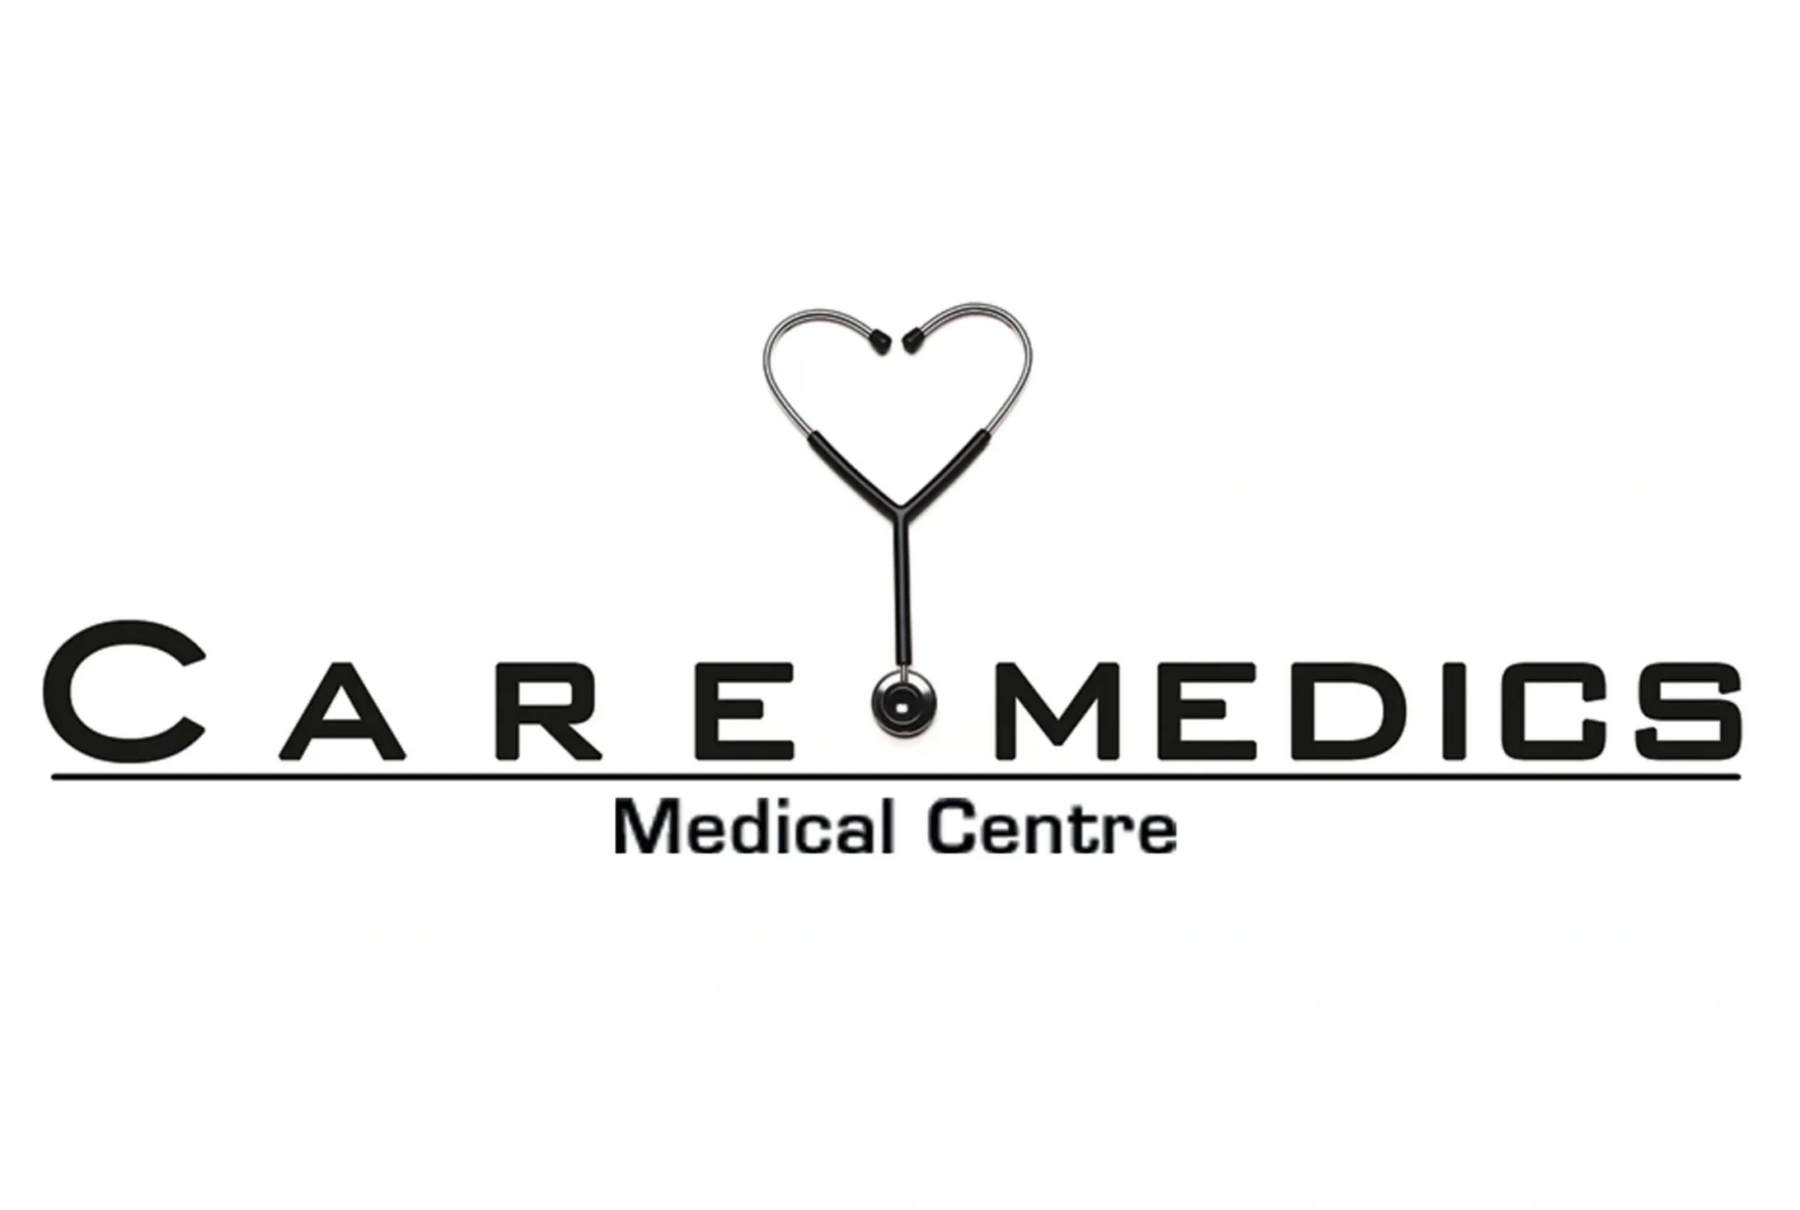 Care Medics Medical Centre logo - Business in Manotick